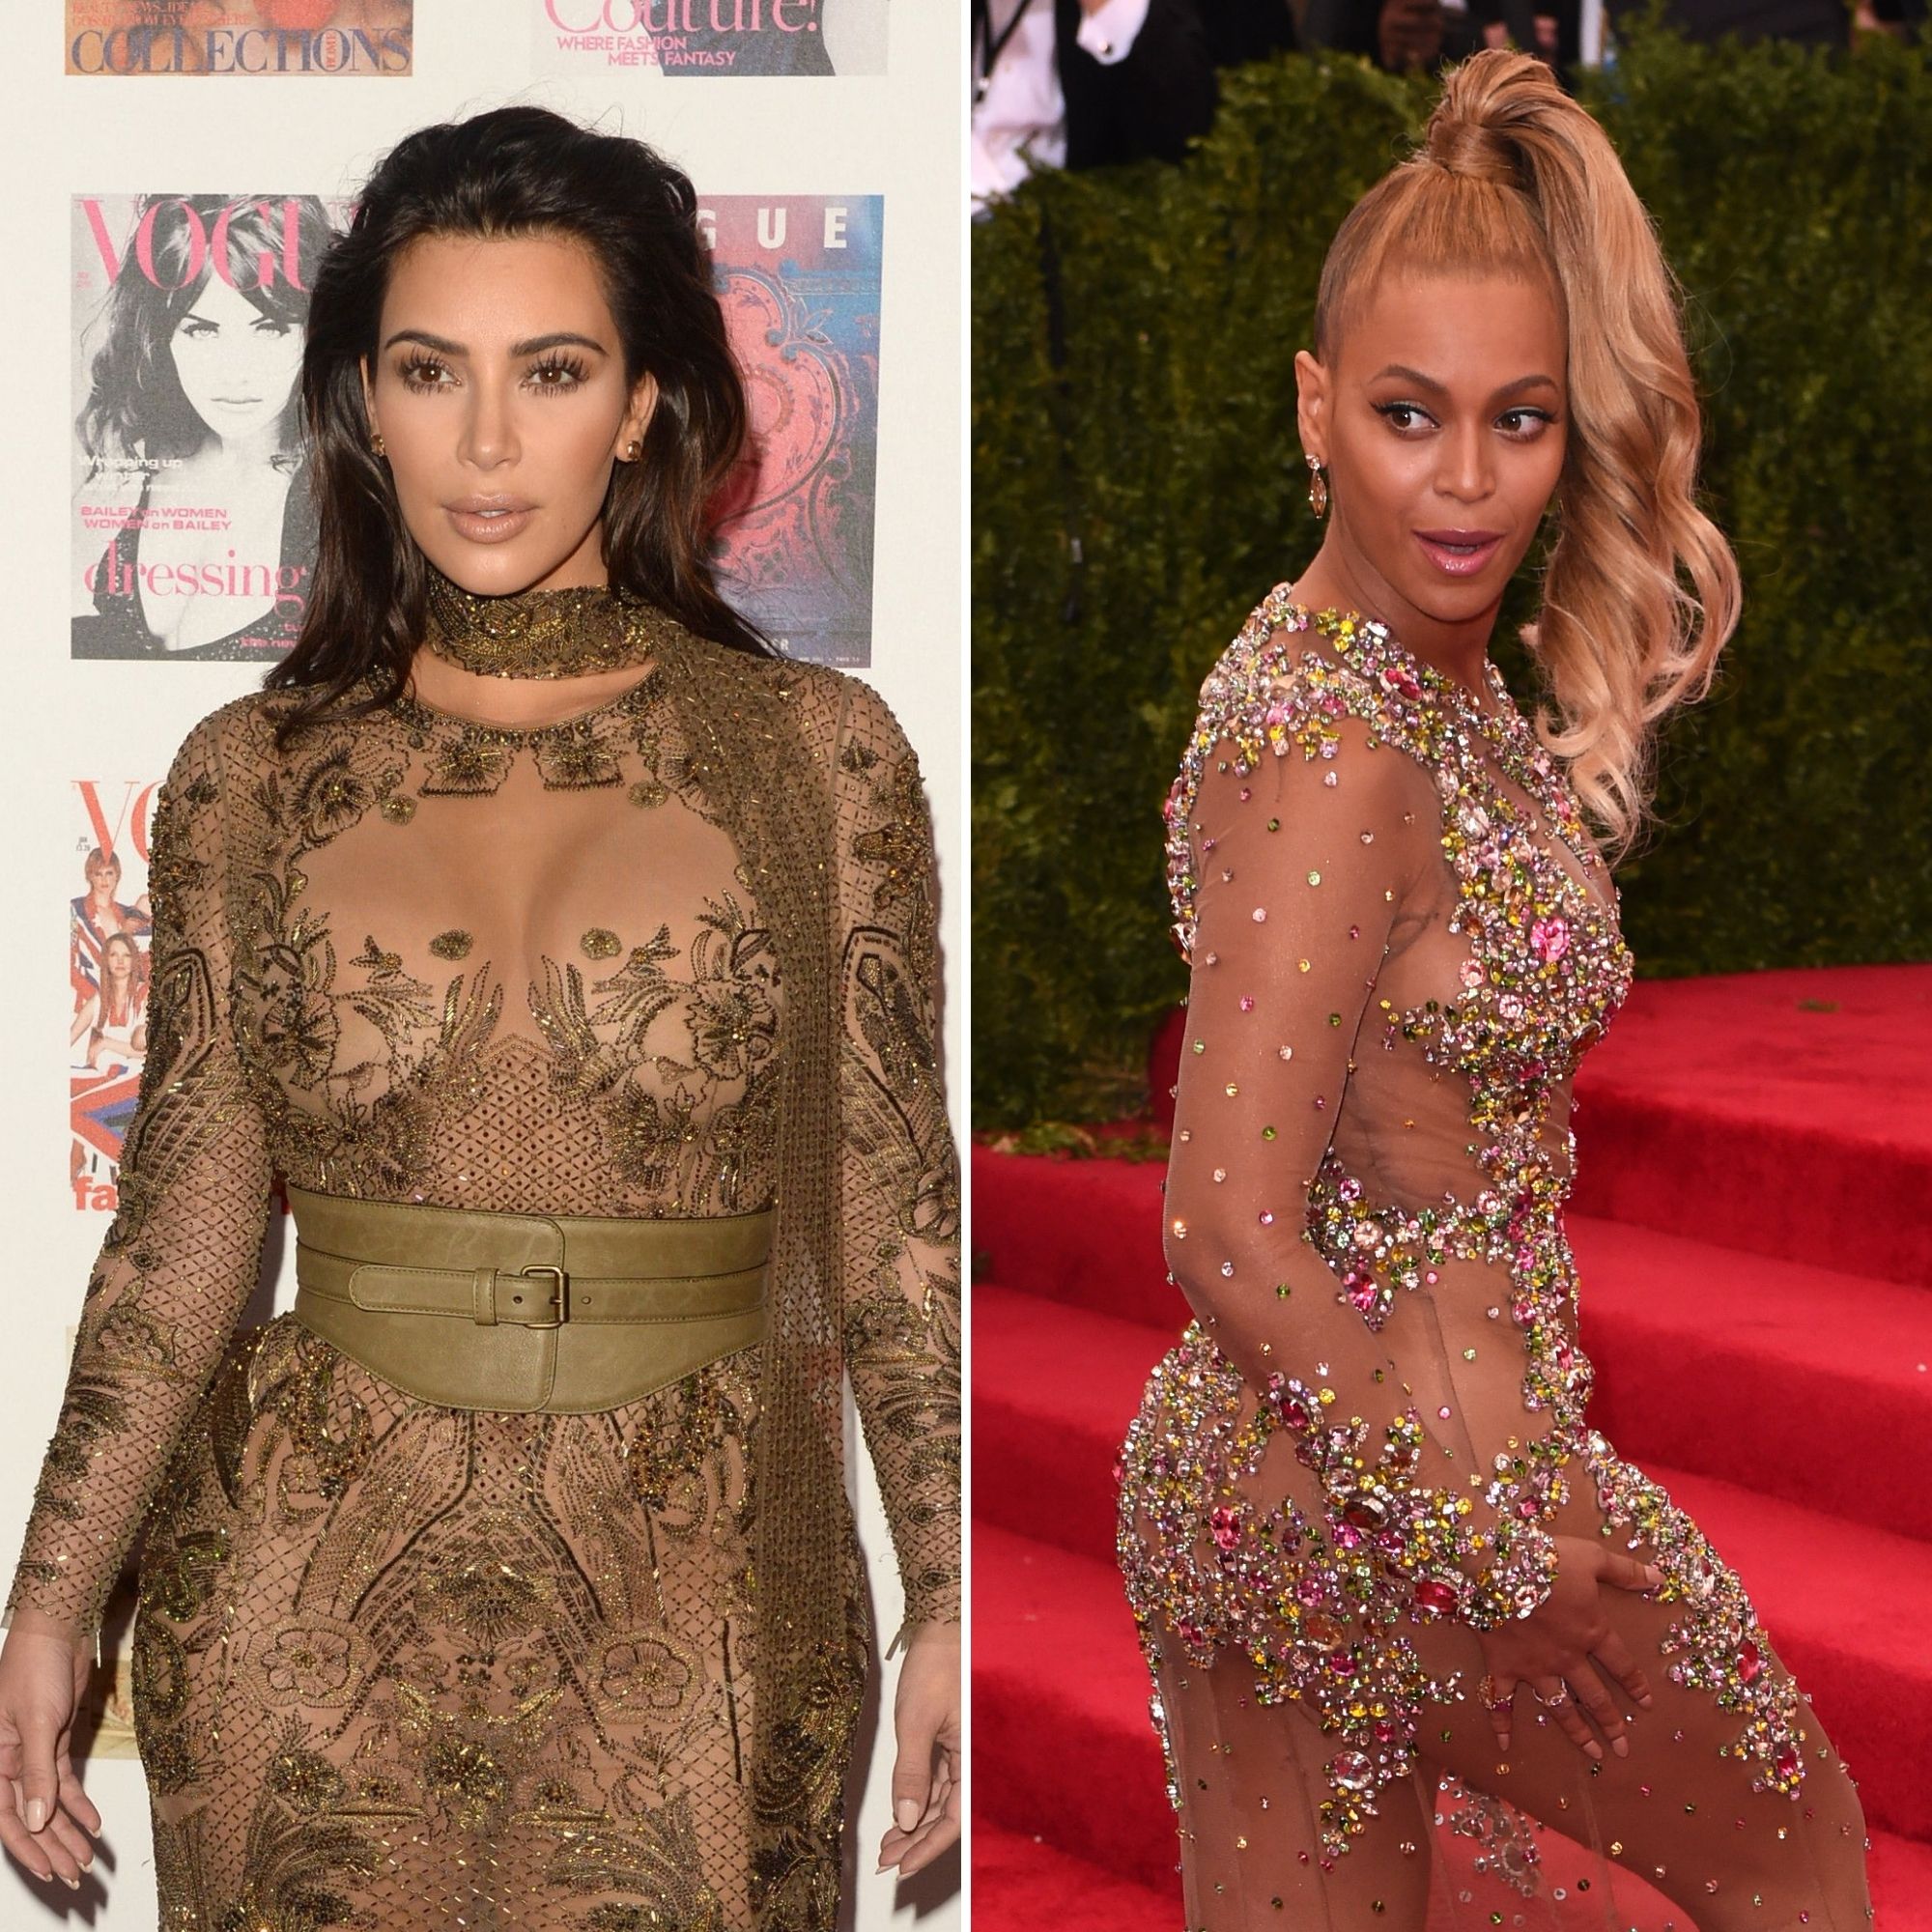 Celeb See Thru Big Nipples - Celebrities Wearing Sheer, See-Through Outfits: Photos